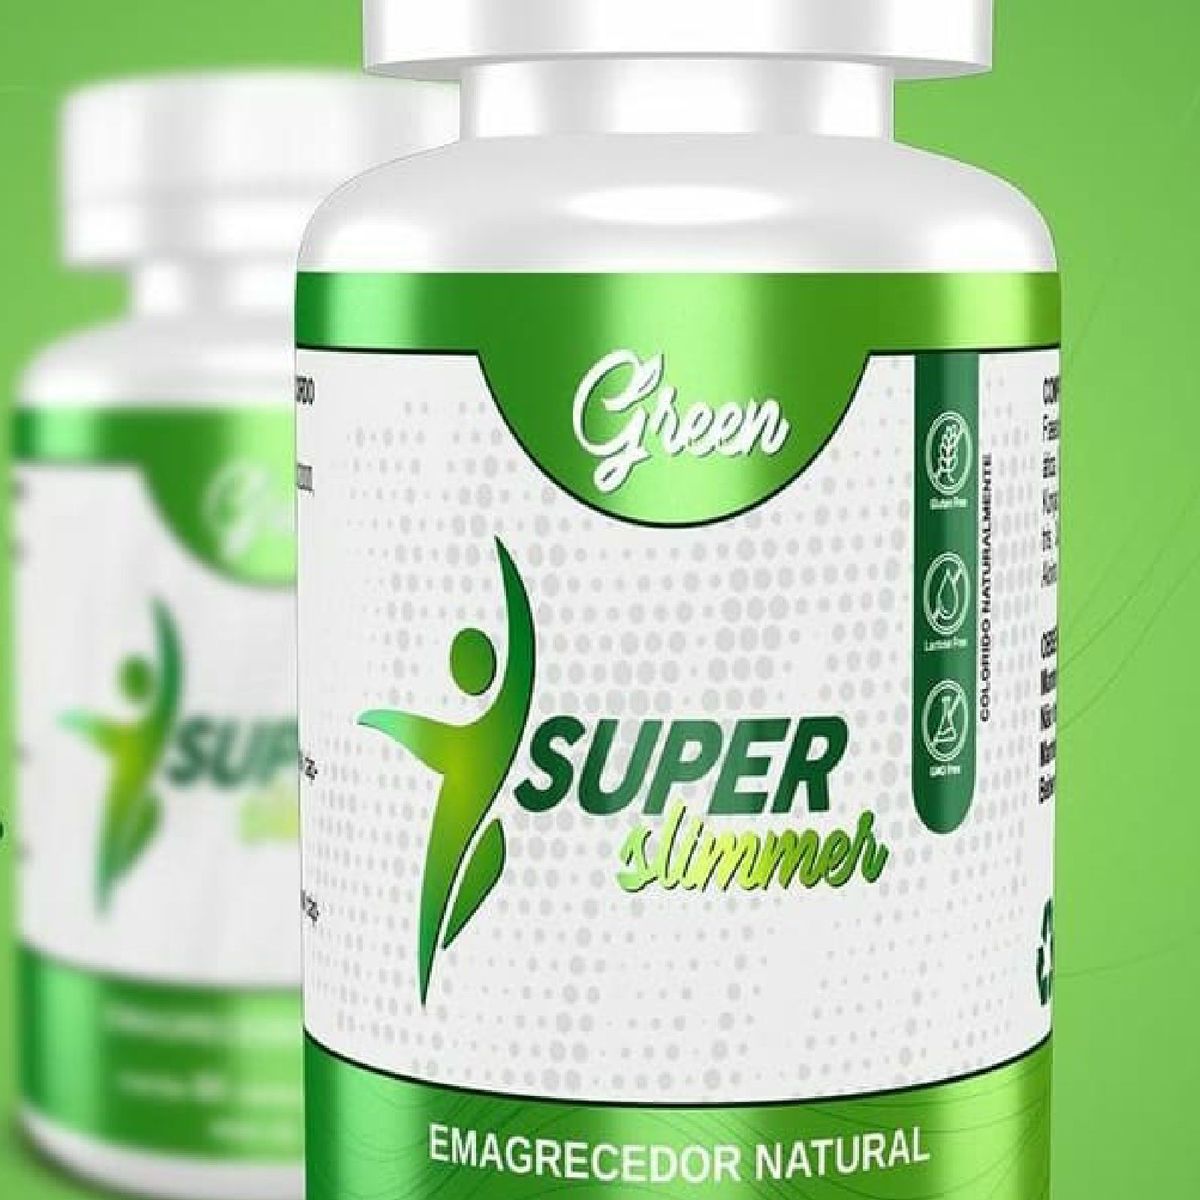 Green super slimmer - Super green - Cosméticos para Massagem - Magazine  Luiza